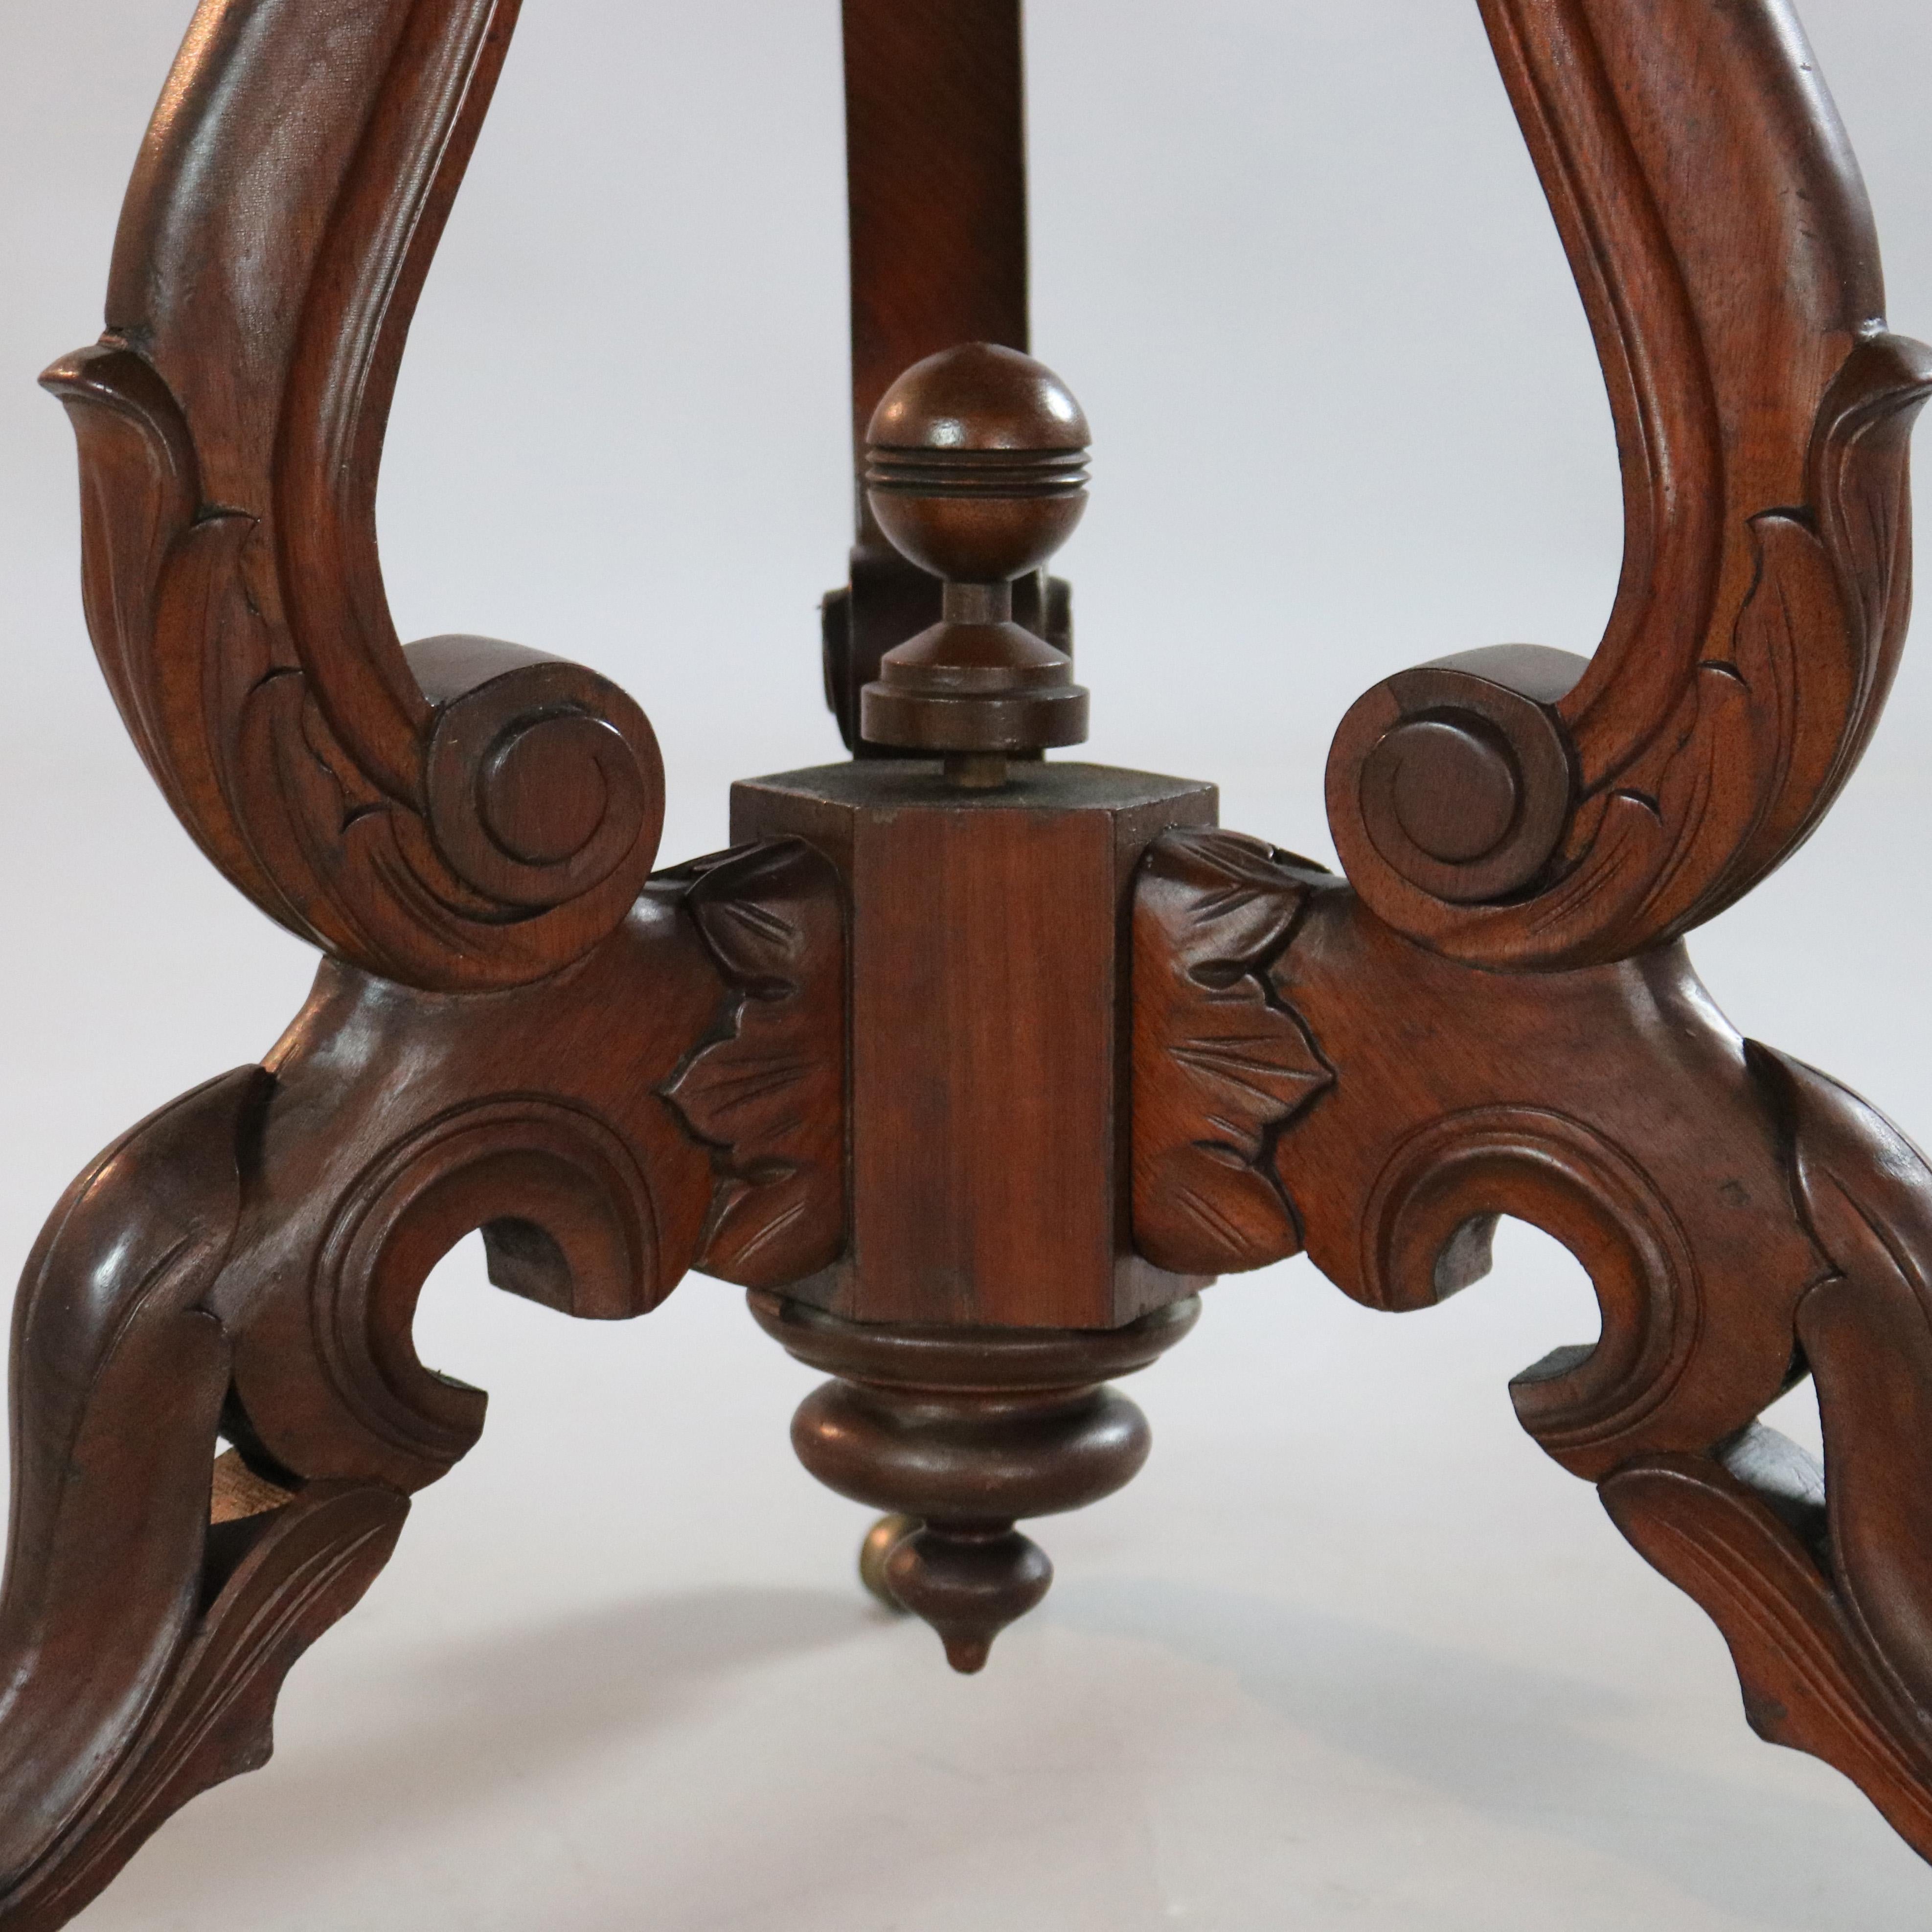 Antique Renaissance Revival Walnut Round Marble-Top Center Table, circa 1890 For Sale 3